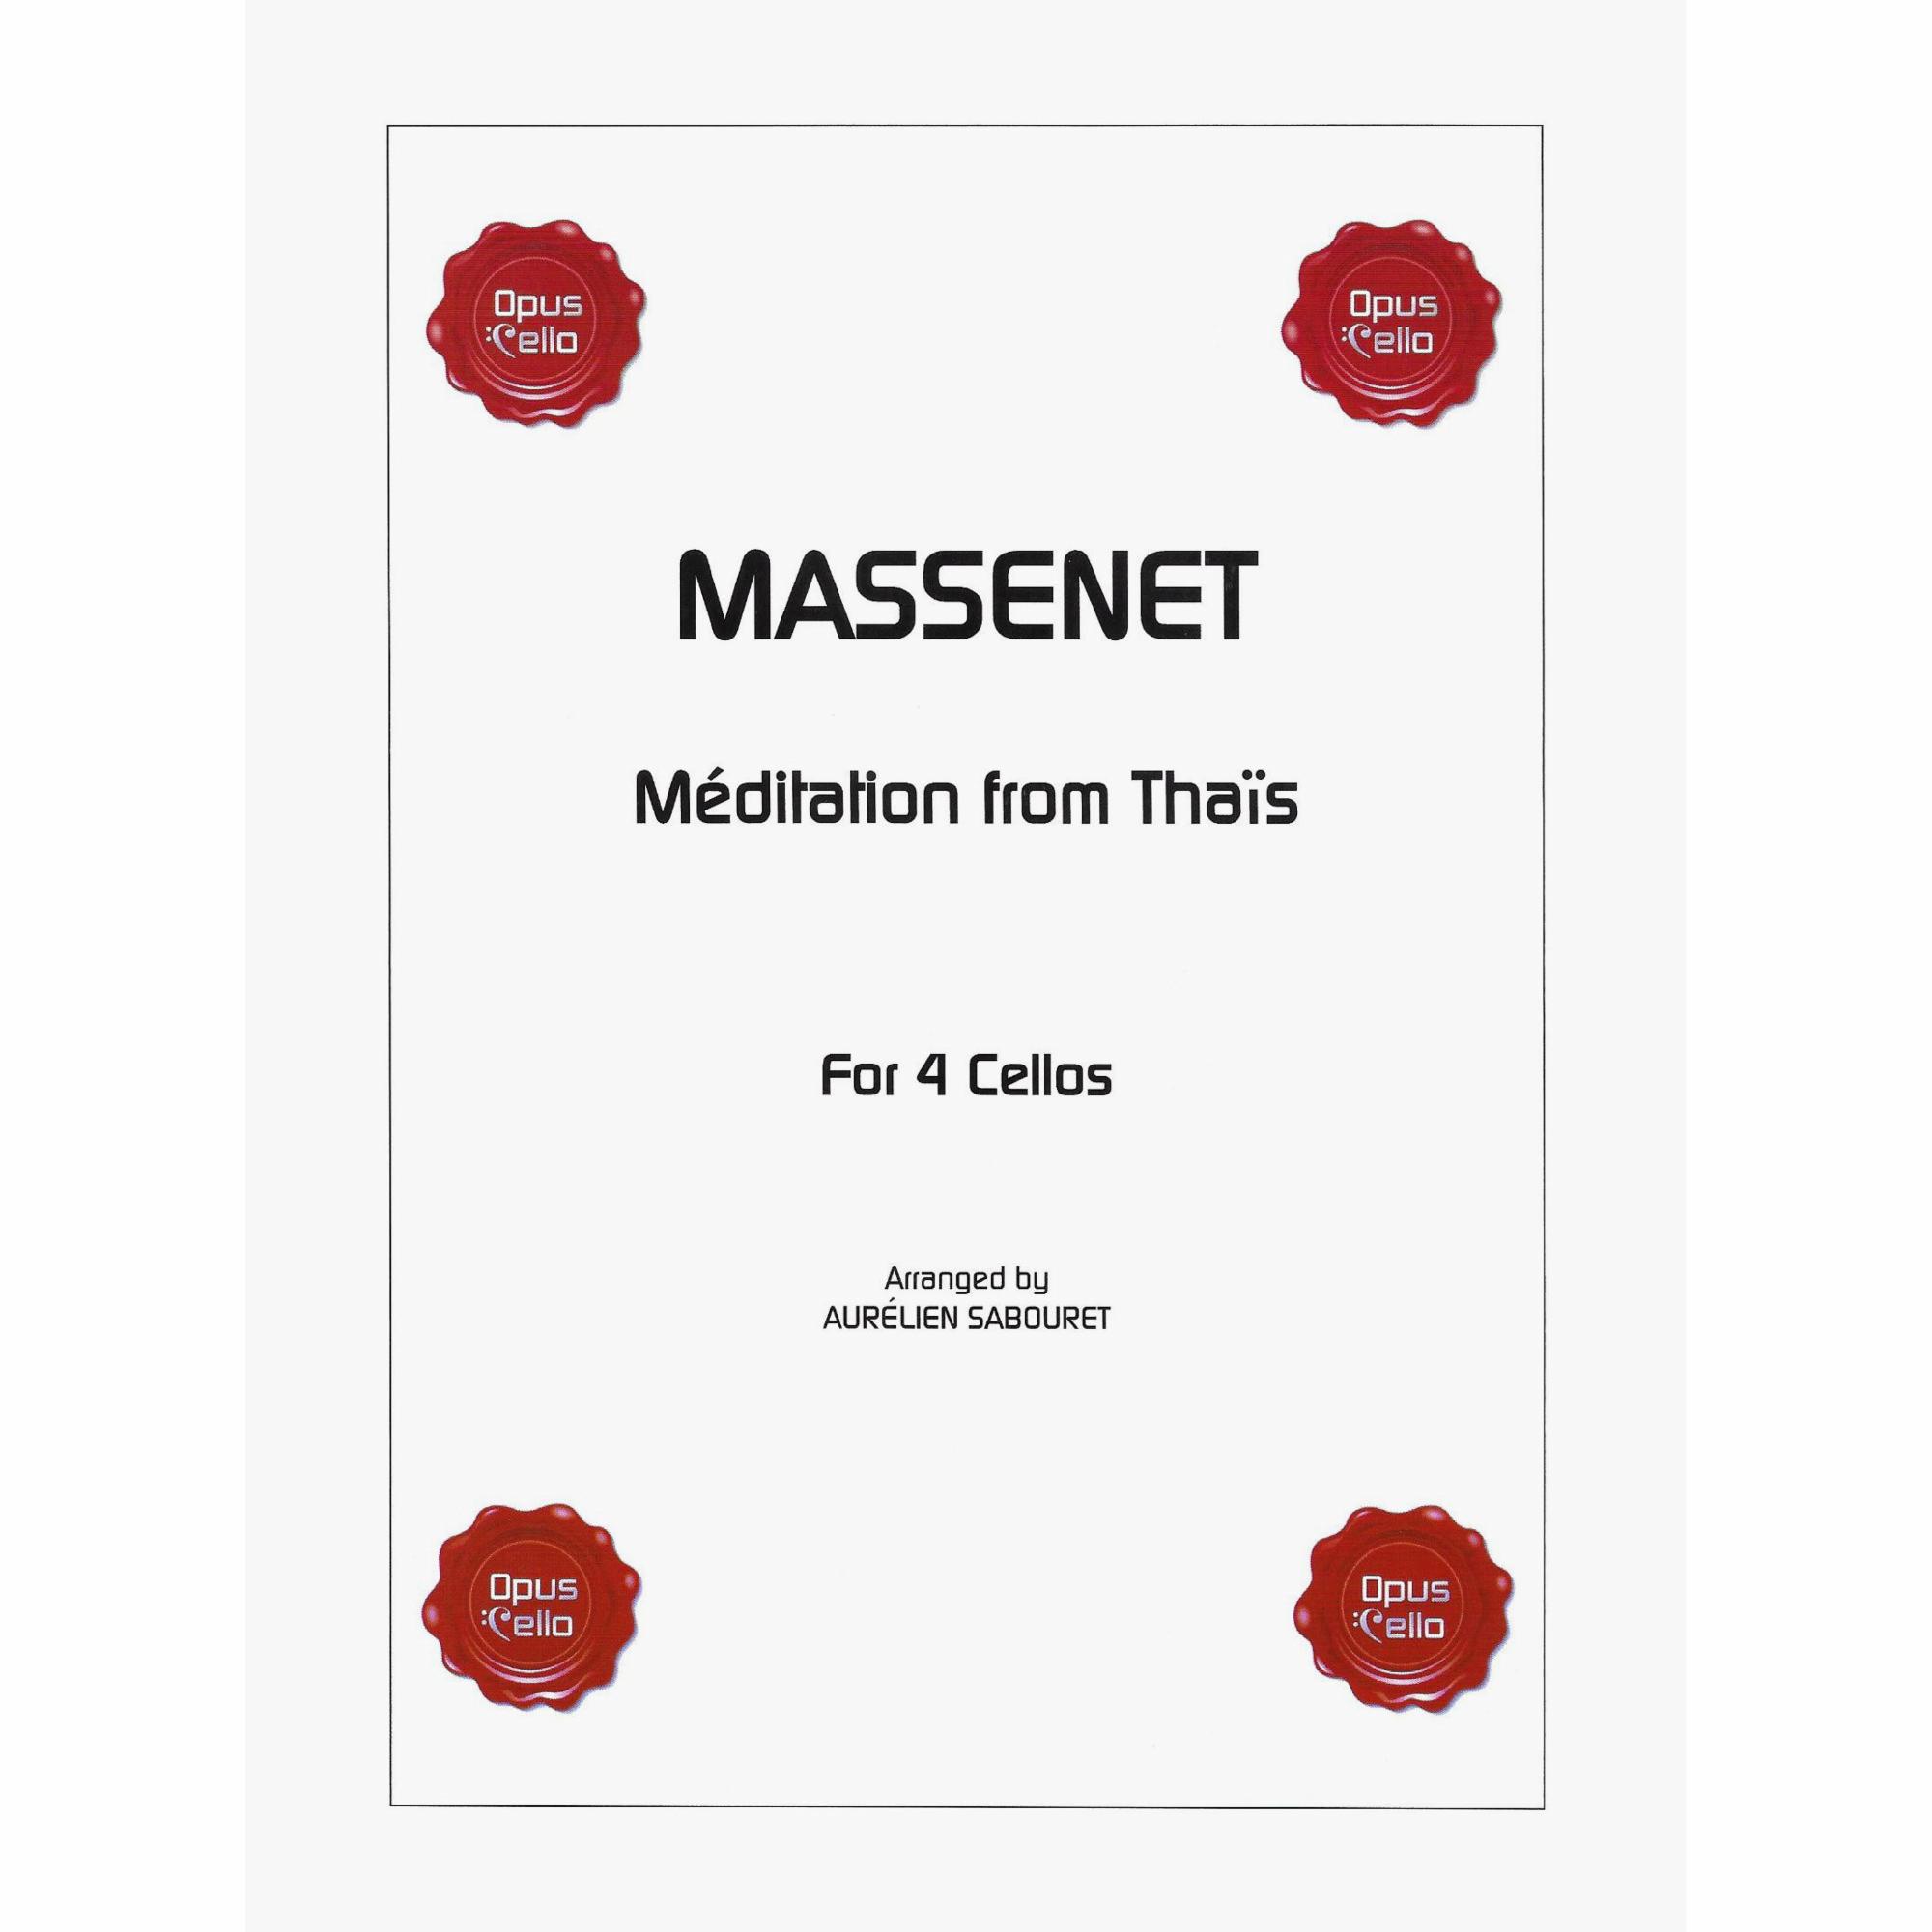 Massenet -- Meditation from Thais for Four Cellos